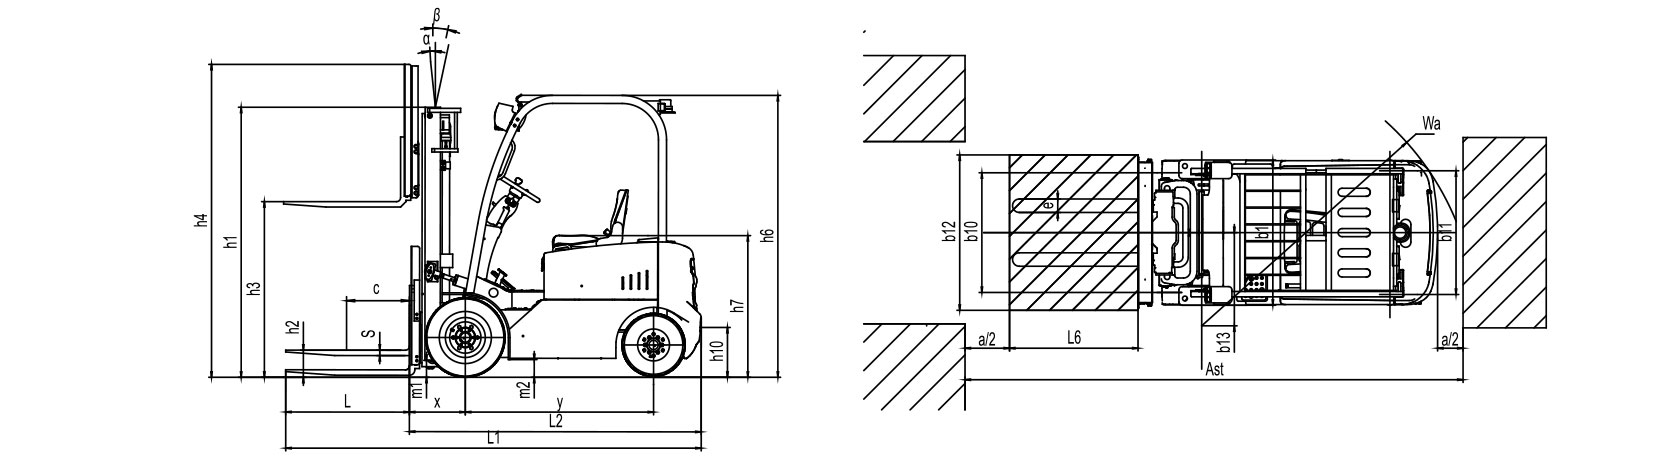 4-Wheel-Electric-Forklift-15-25_drawing.jpg (94 KB)